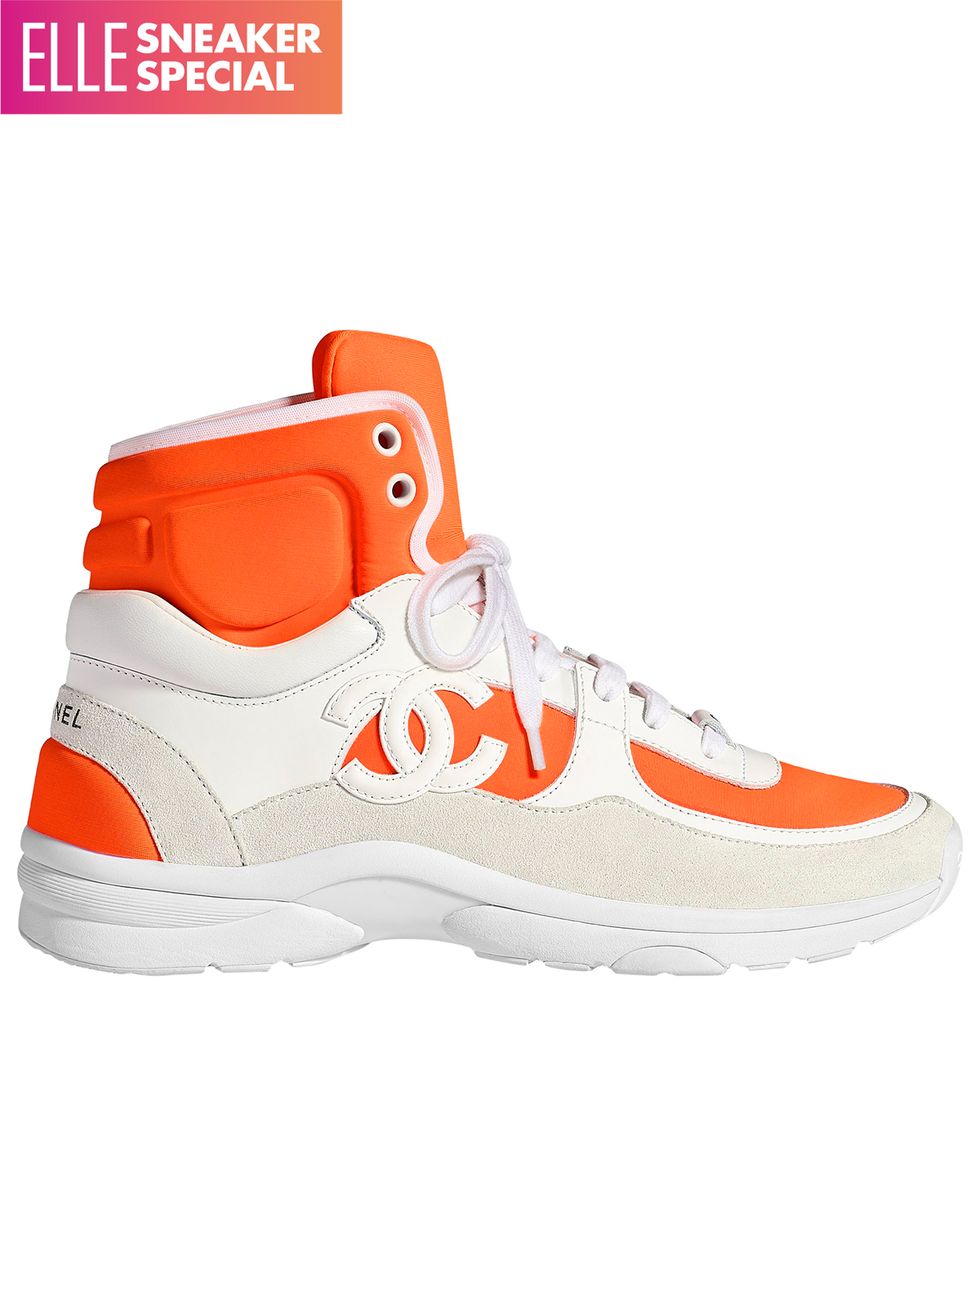 Footwear, Product, Shoe, Orange, White, Sneakers, Athletic shoe, Logo, Tan, Carmine, 